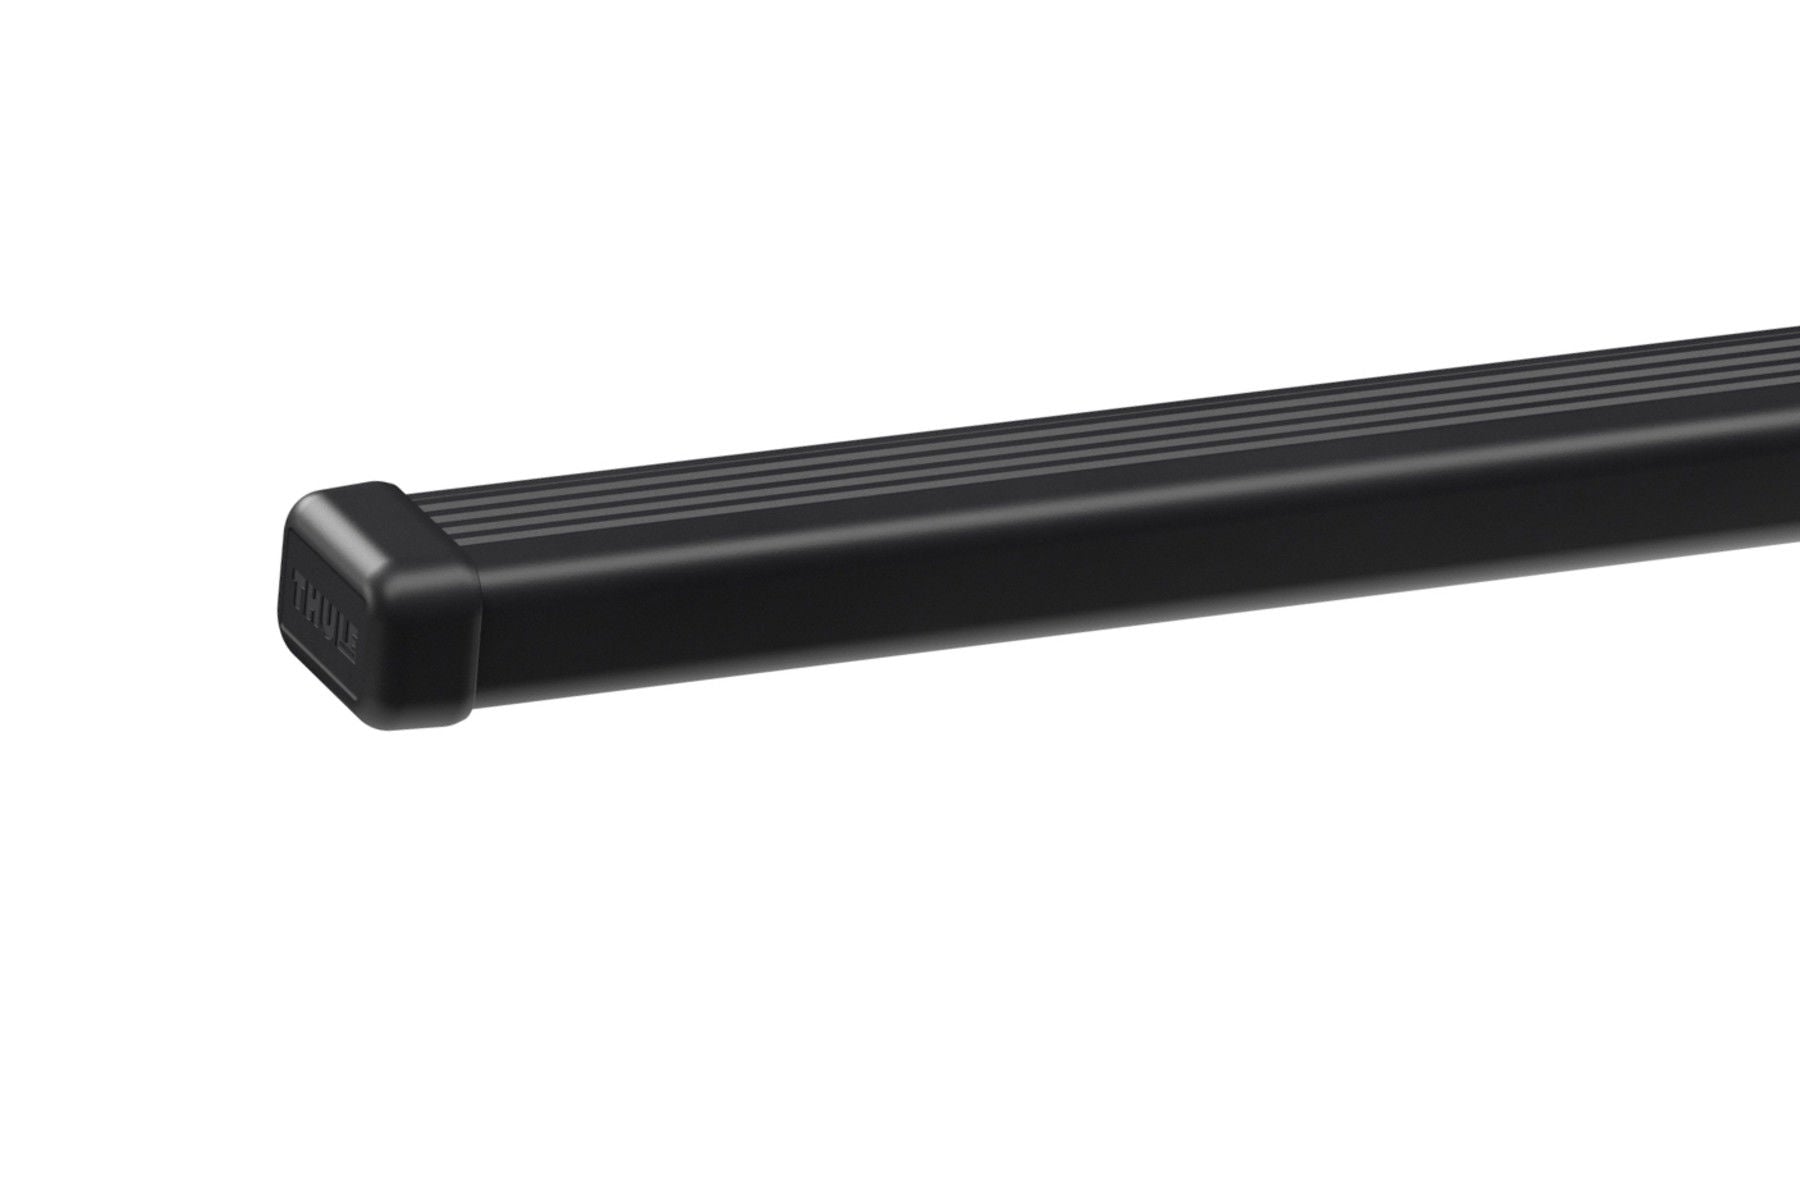 Thule 712500 - (2) Black Evo SquareBar Roof Bars (150 cm / 60")